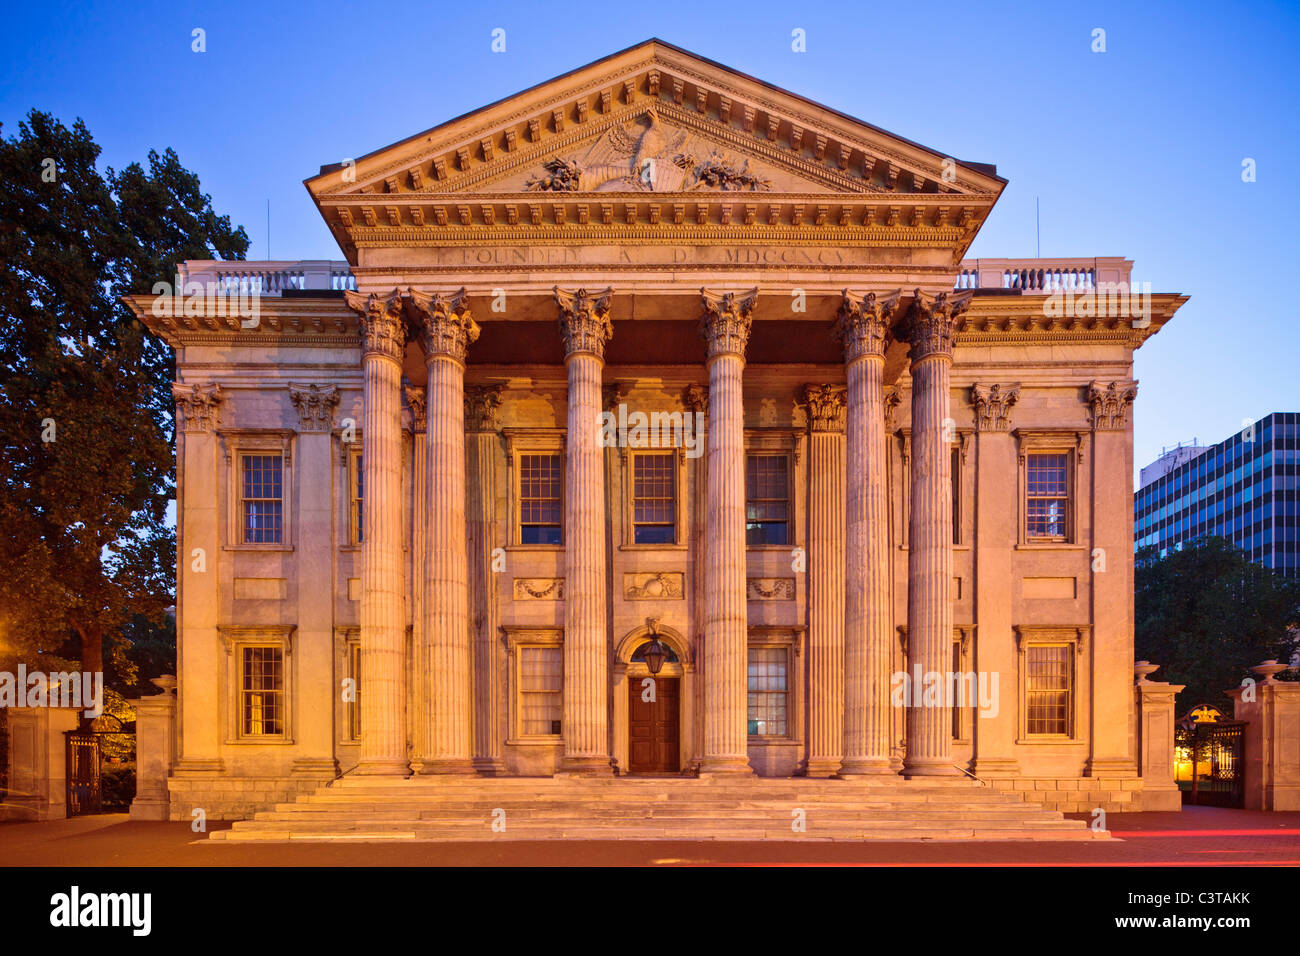 First Bank of US, Philadelphia Stock Photo: 36799943 - Alamy